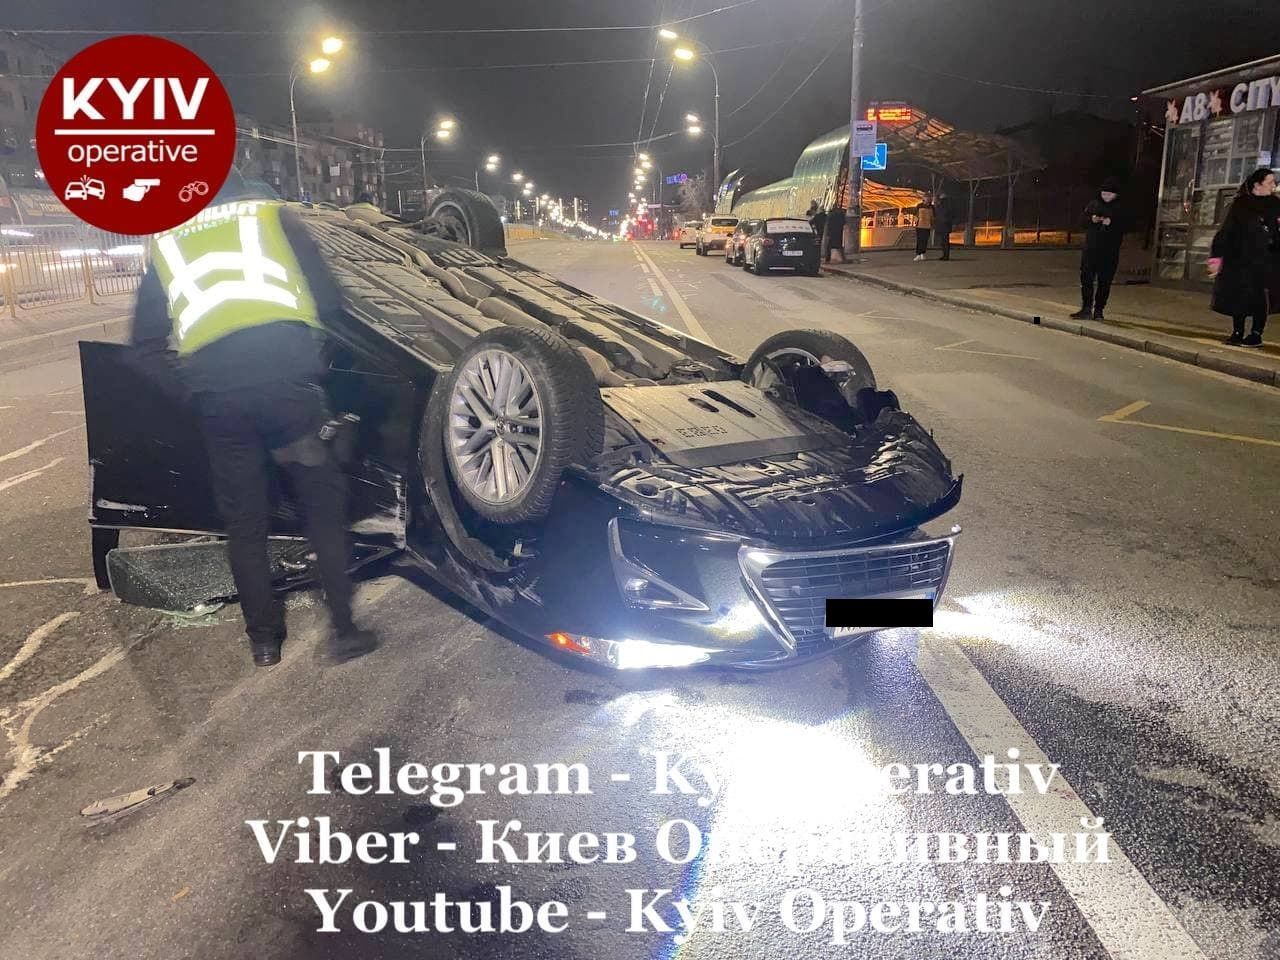 Убегал от драки, а попал под авто: в Киеве погиб юноша